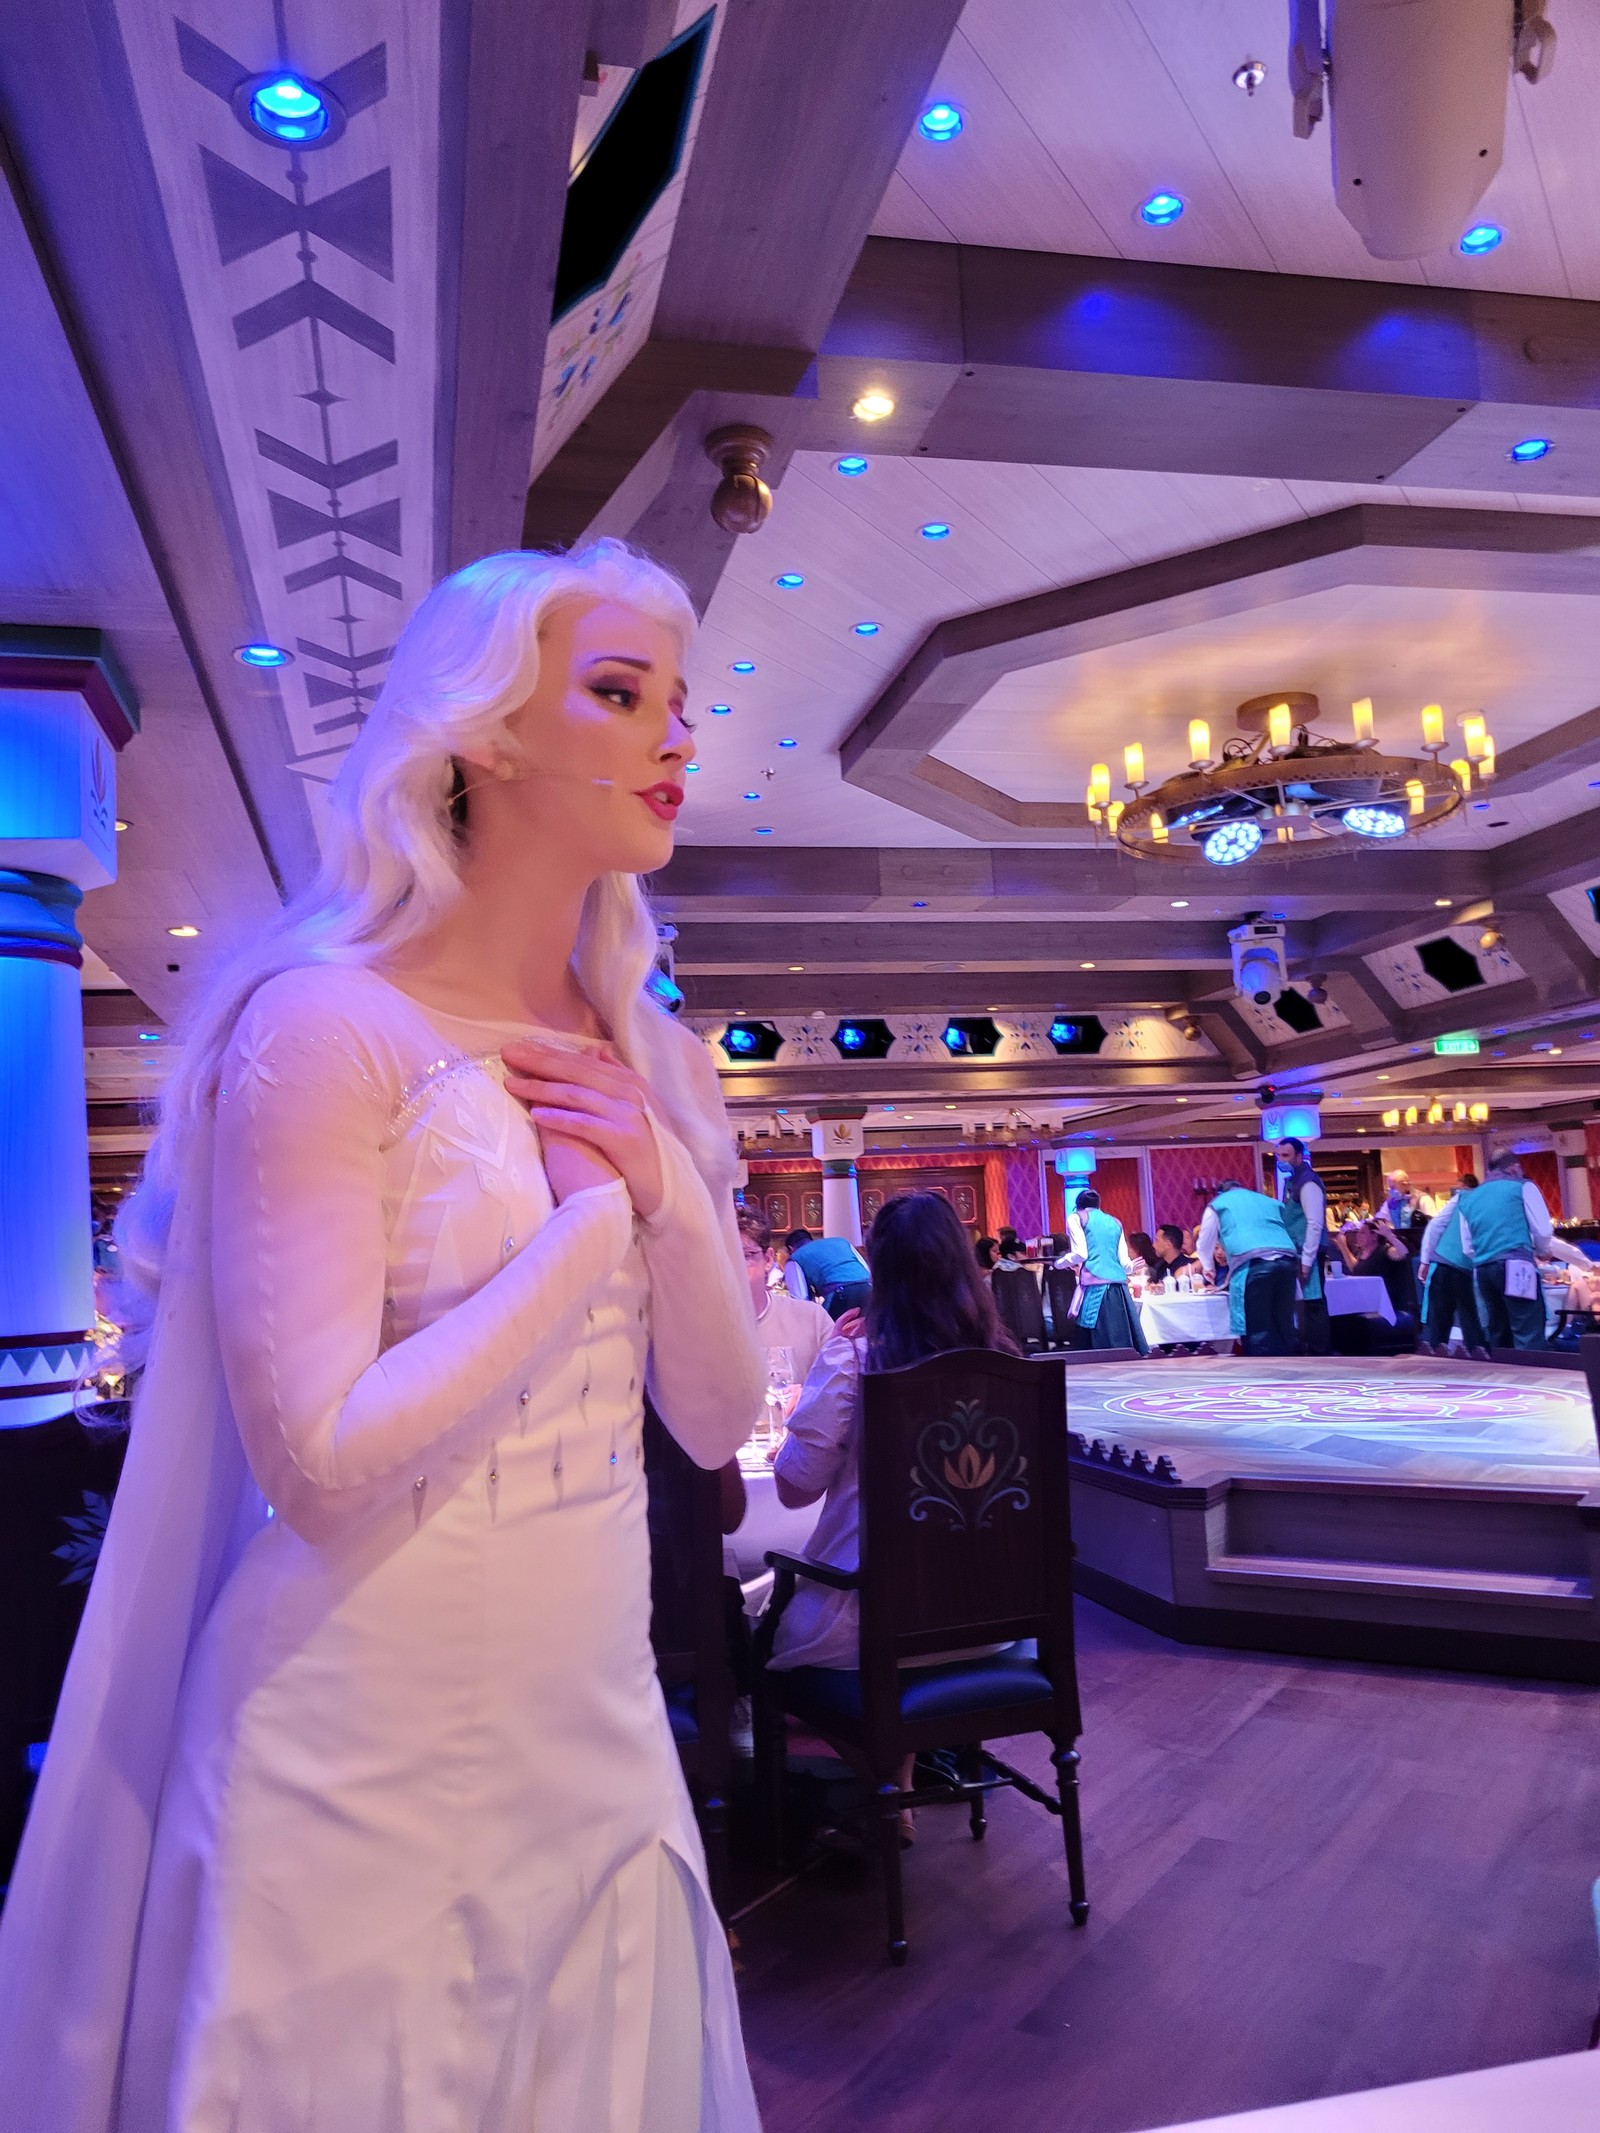 Entre os restaurantes, um destaque é o jantar musical do Arendelle: a Frozen dining experience, inspirado em 'Frozen'